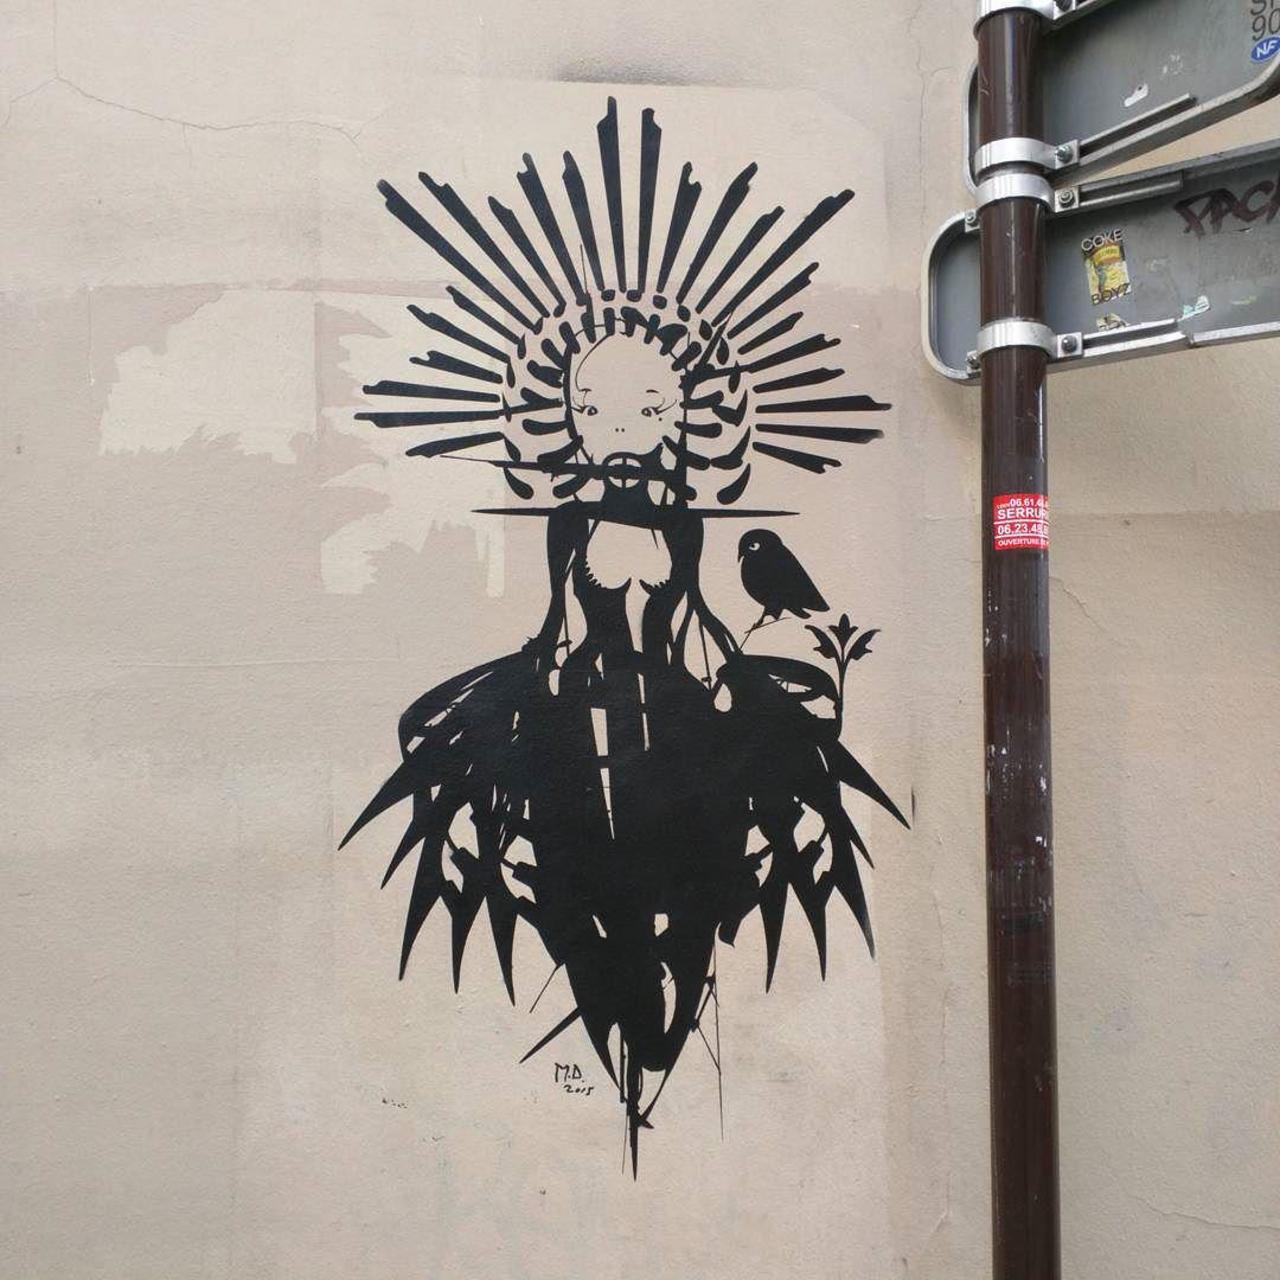 #Paris #graffiti photo by @alphaquadra http://ift.tt/1Pc7xqz #StreetArt http://t.co/rXQrFPhs7F